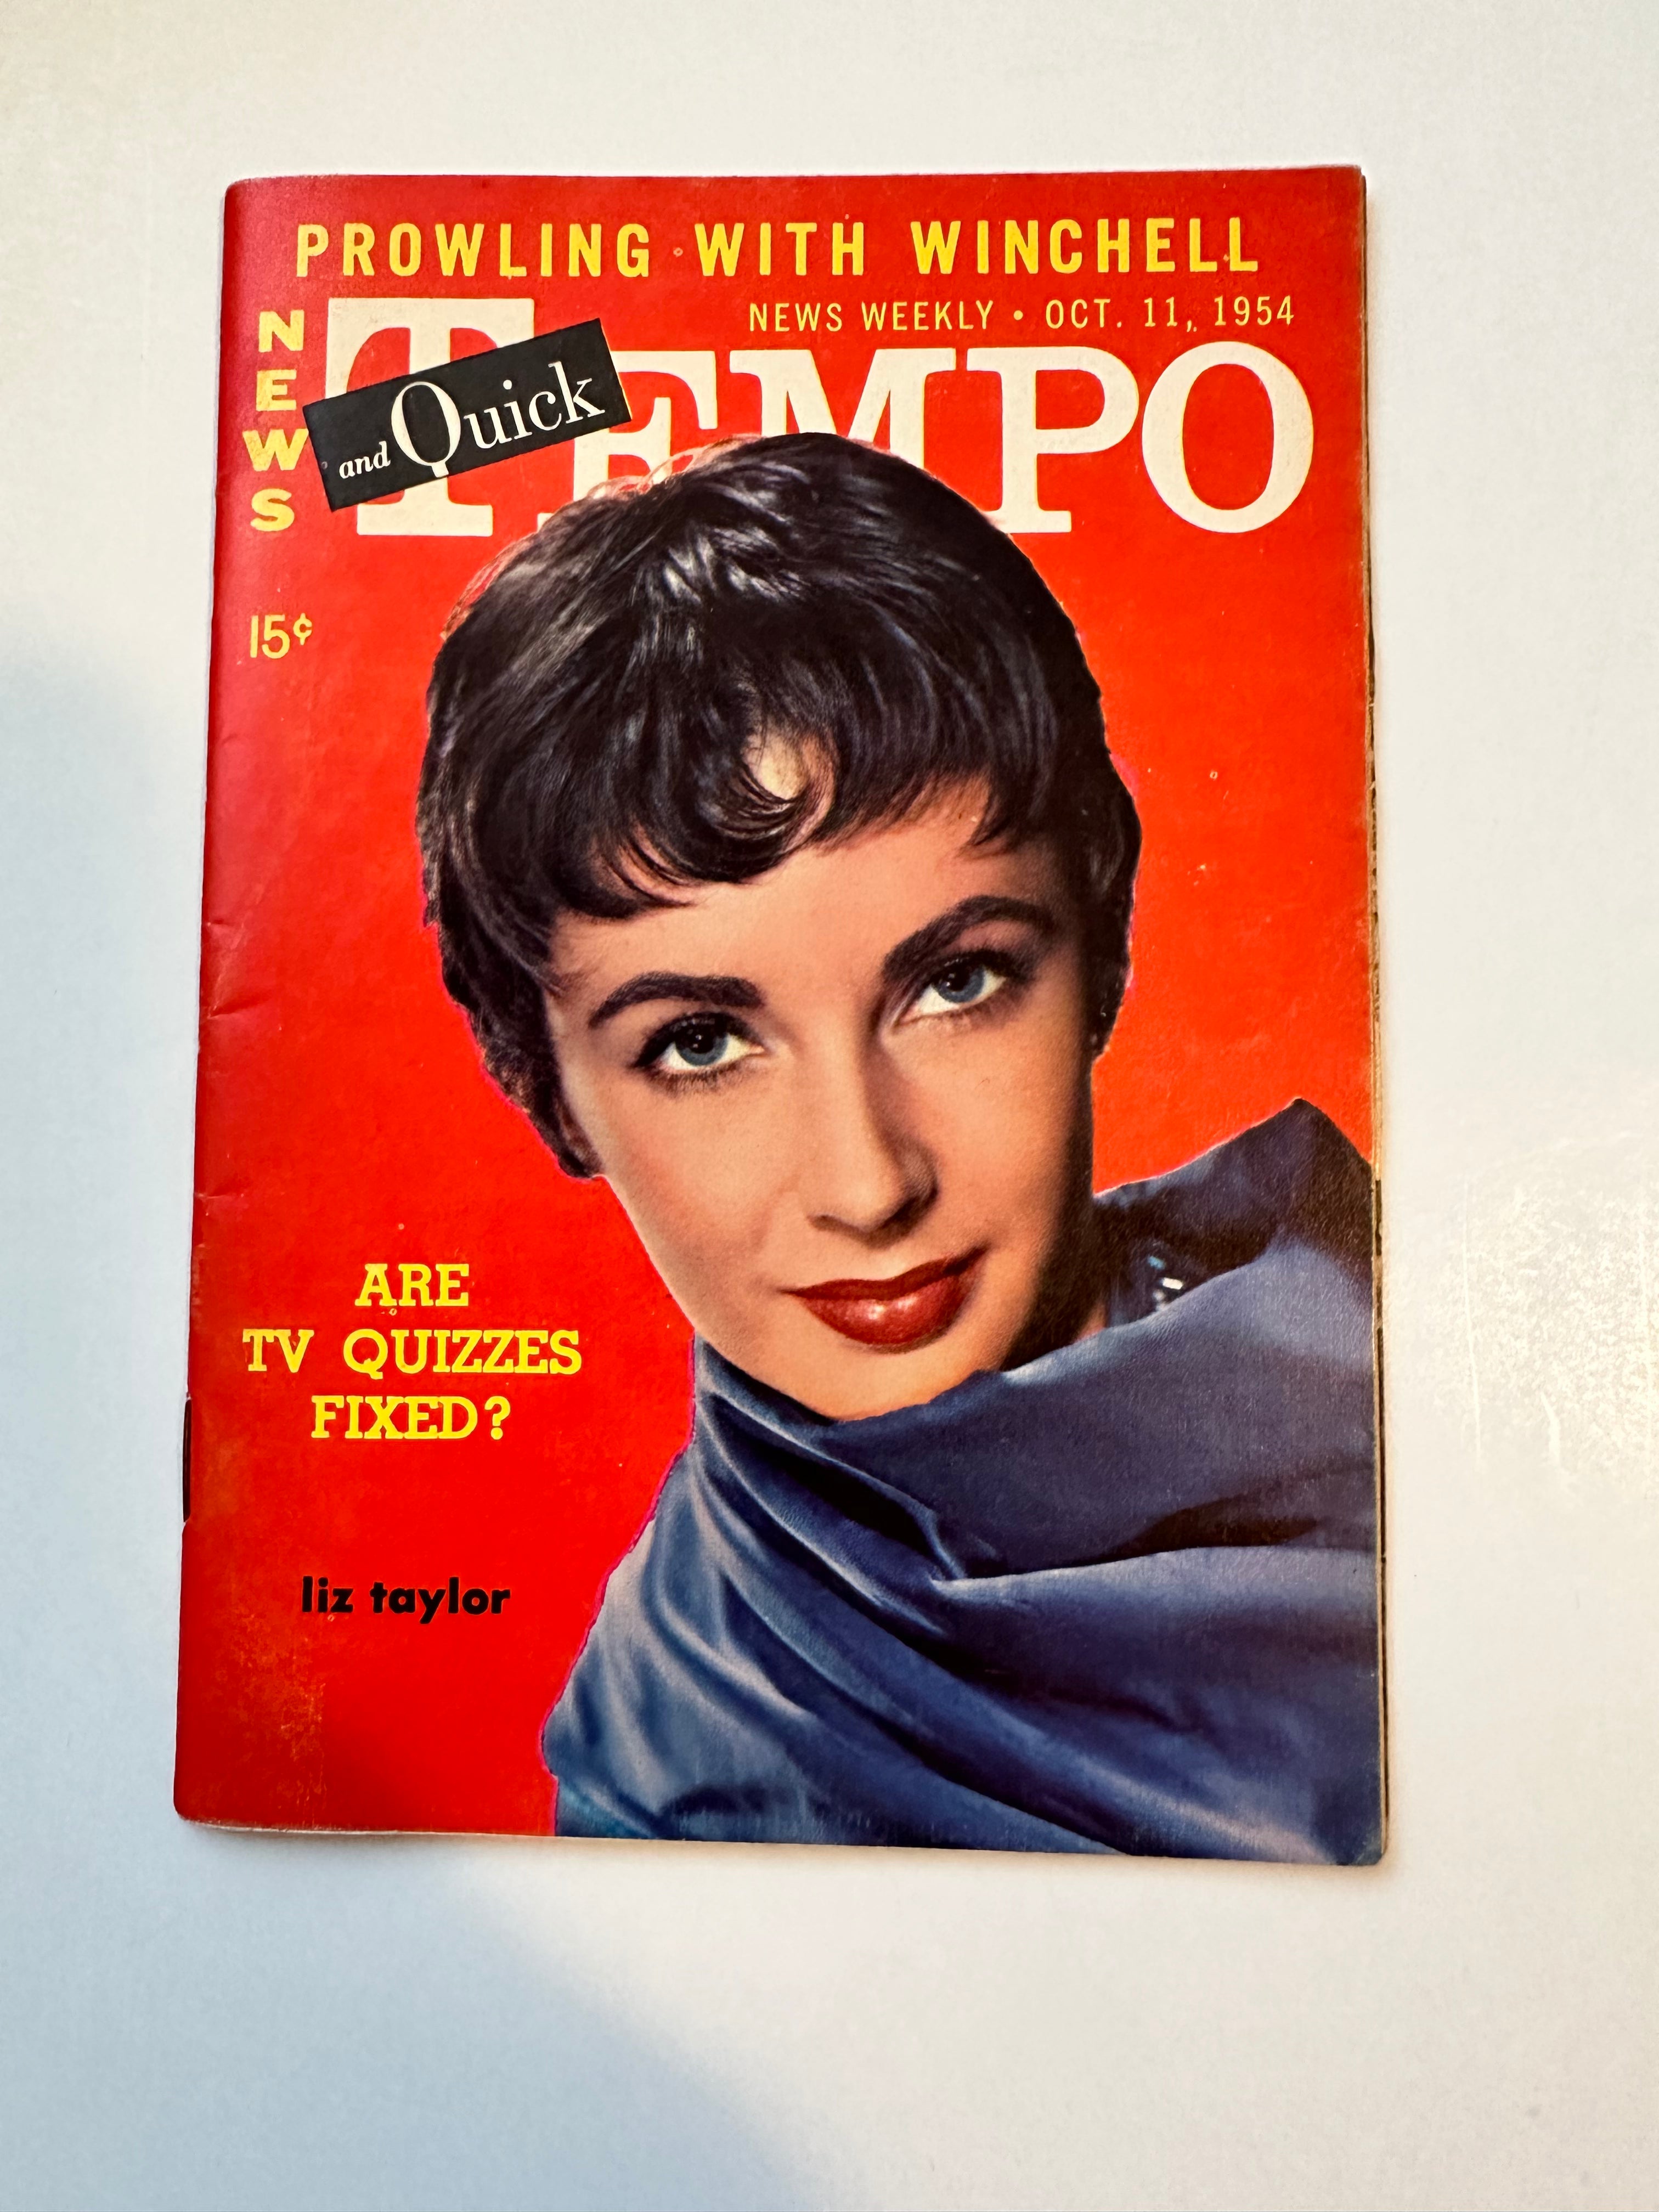 Elizabeth Taylor Tempo small version movie star booklet 1954